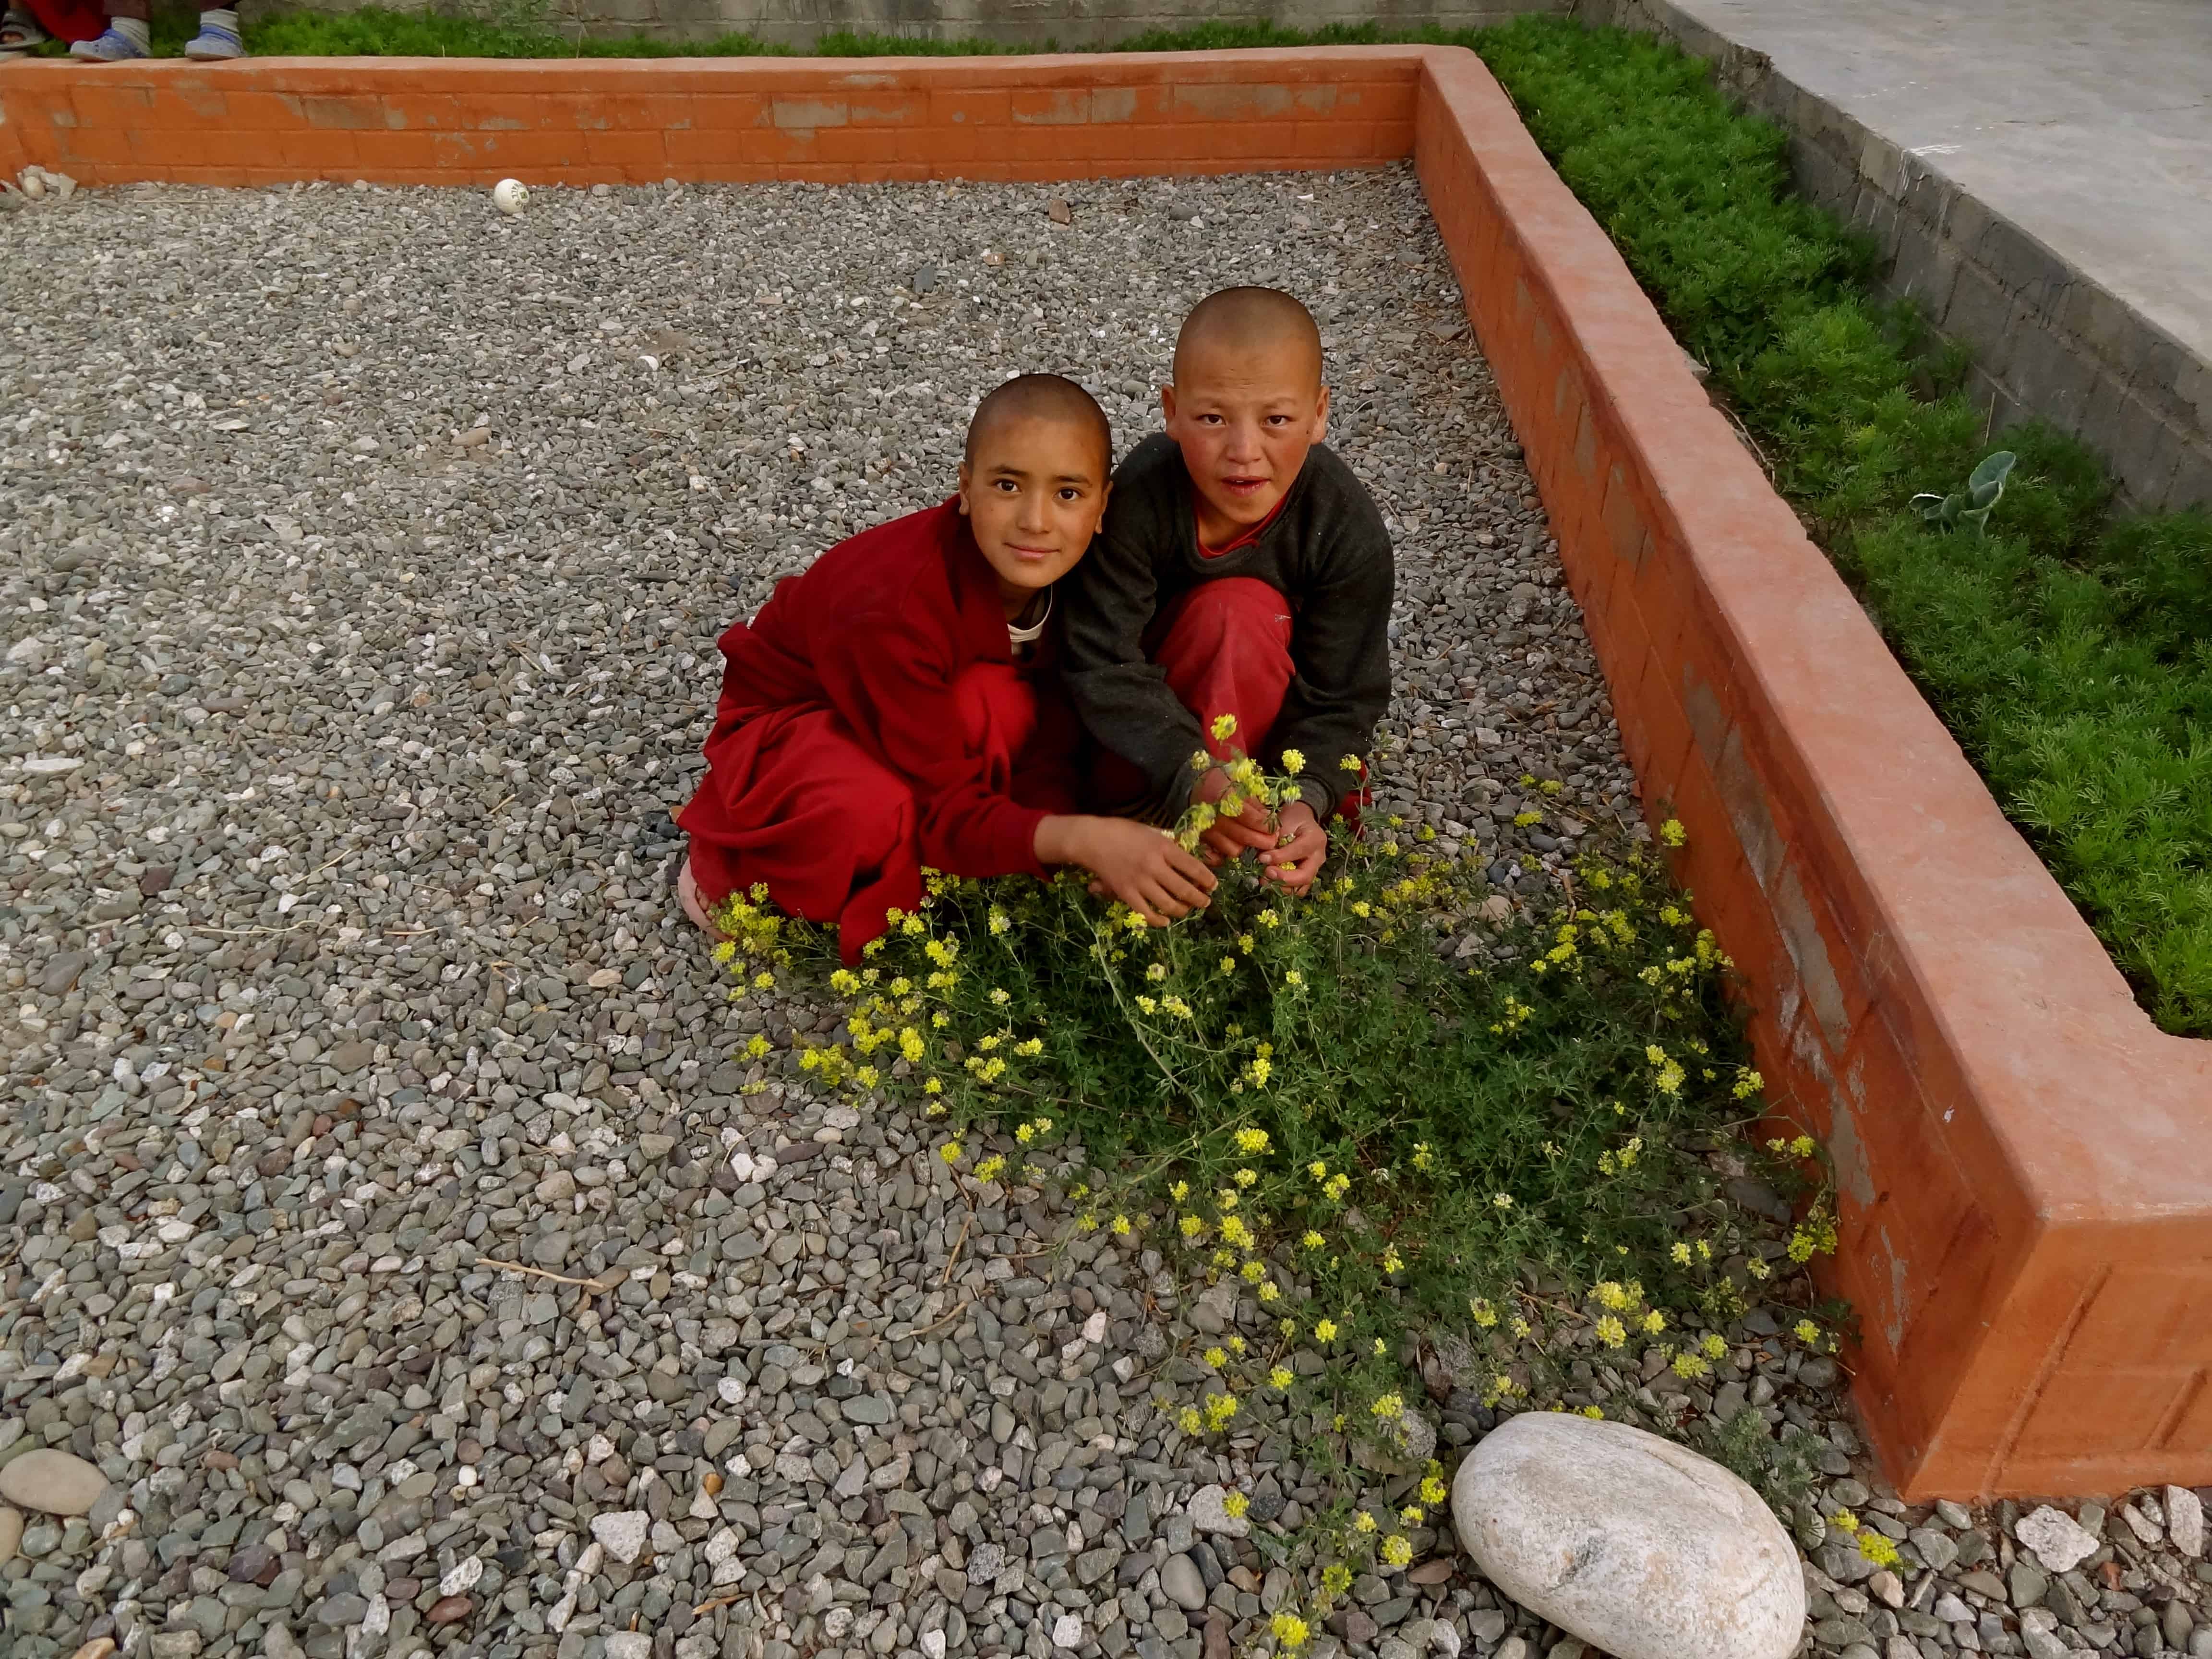 Ladakh nuns, Ladakh people